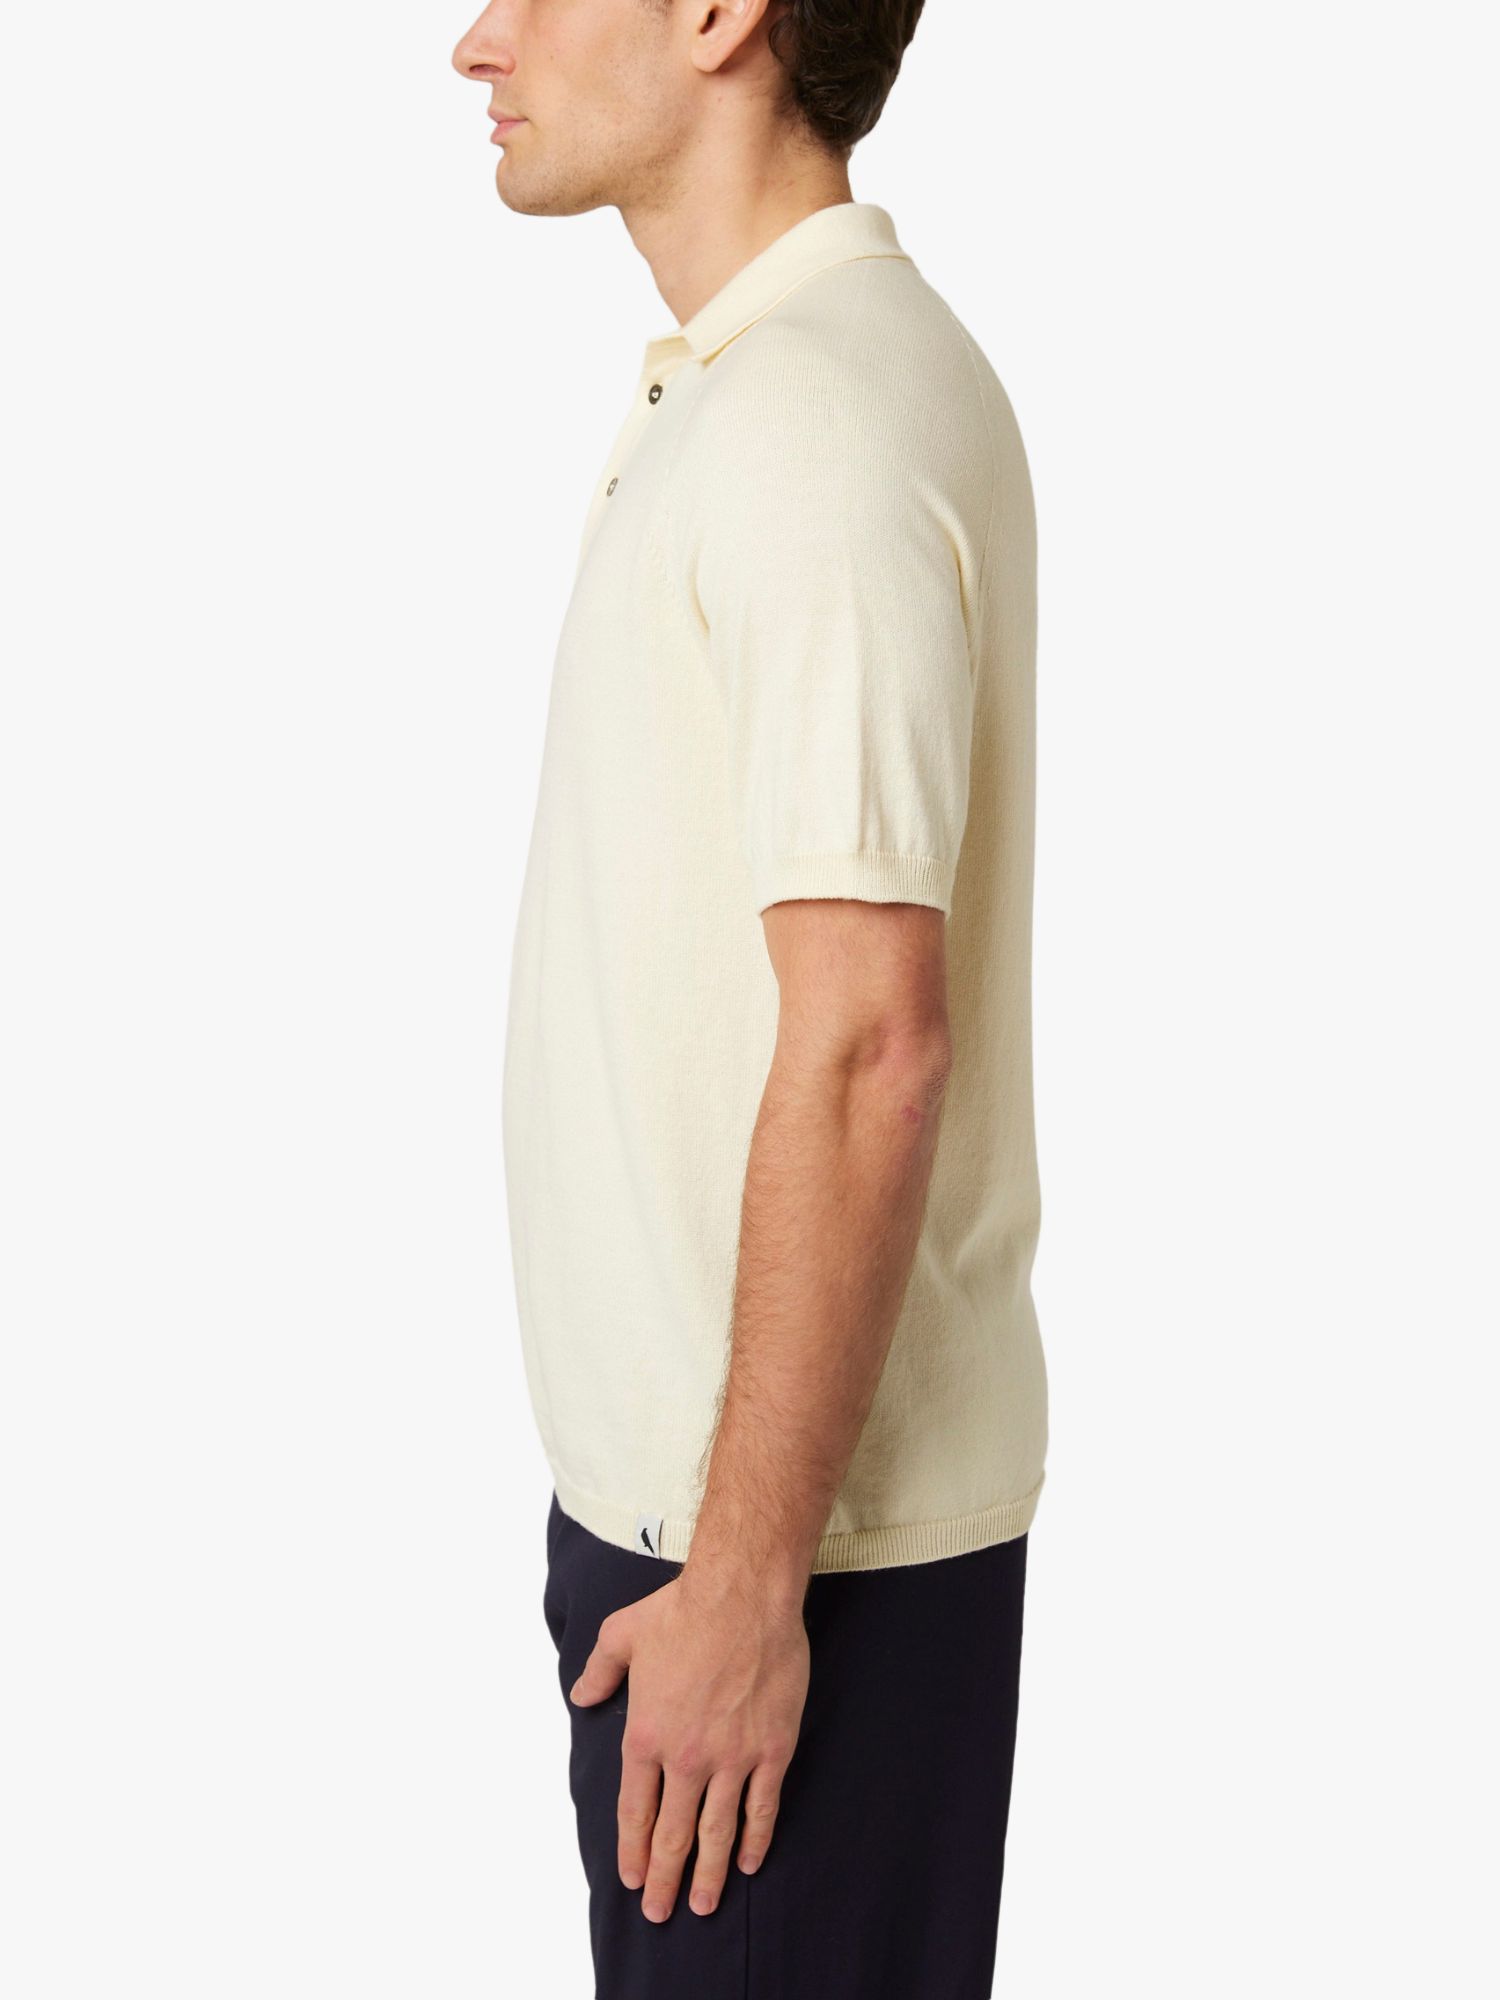 Peregrine Jones Polo Shirt, White, L